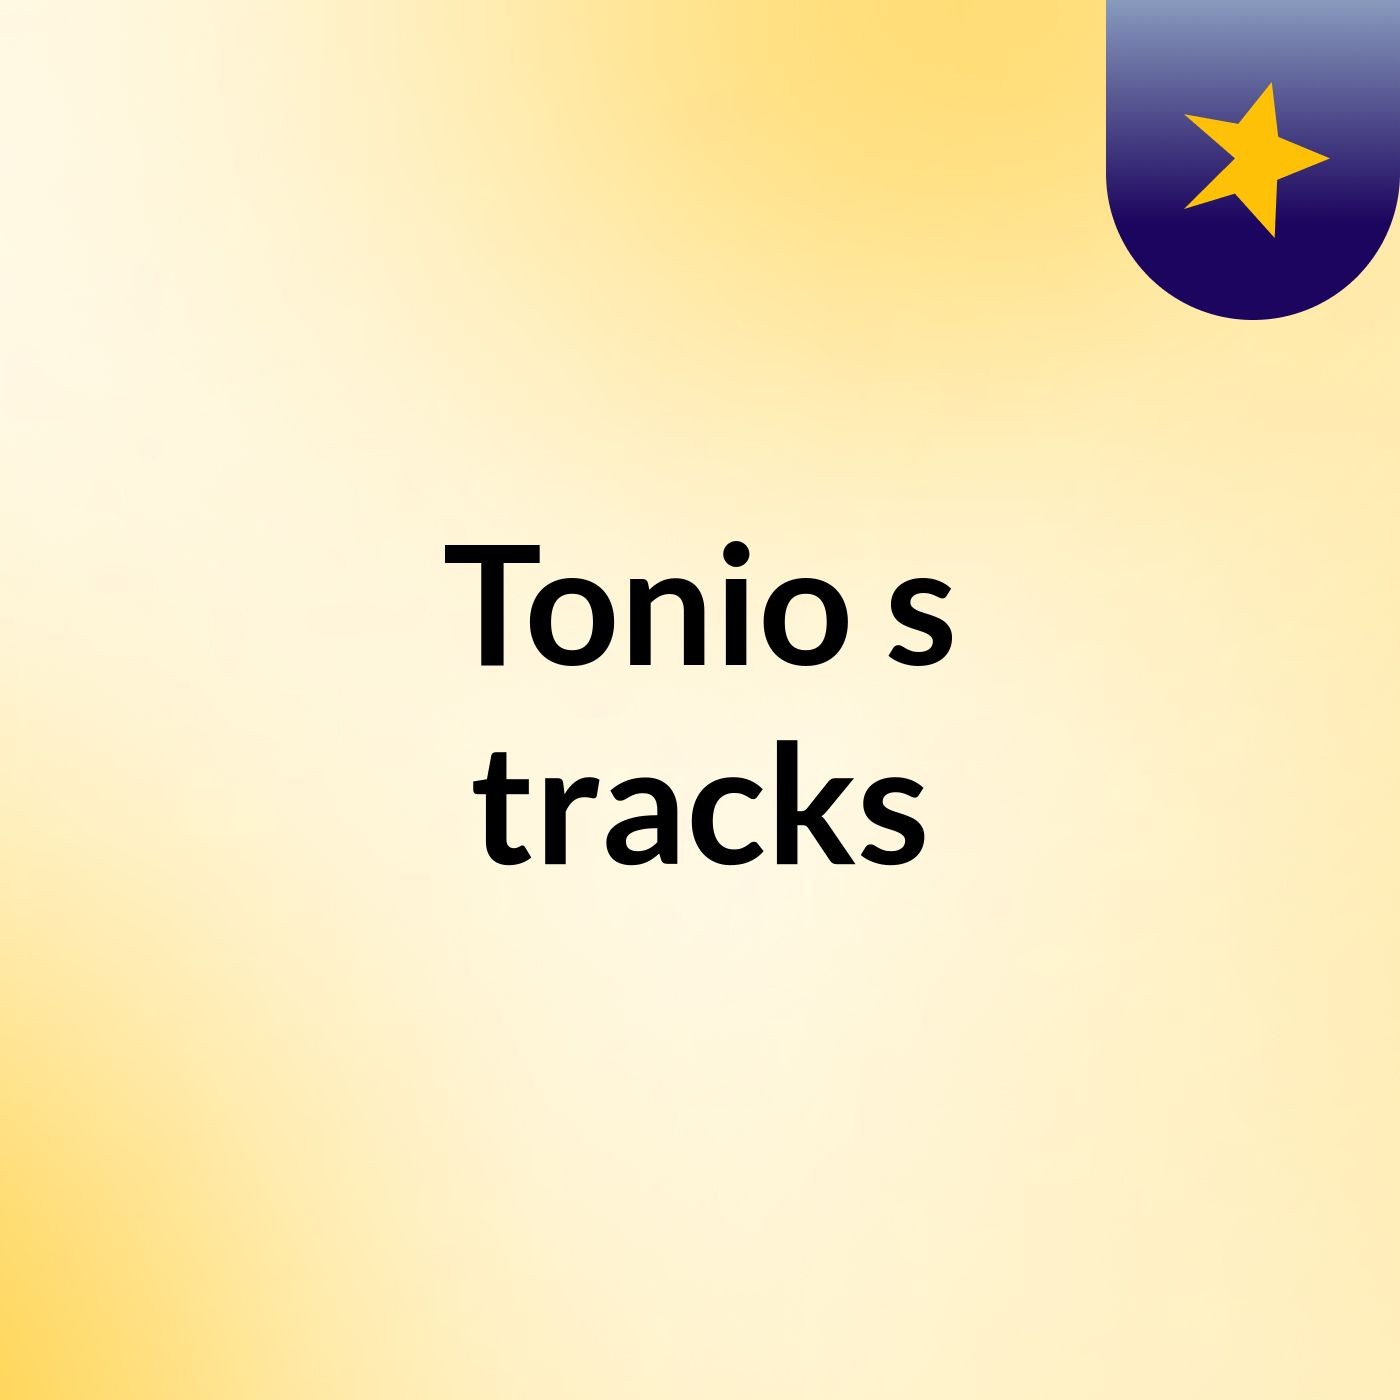 Tonio's tracks